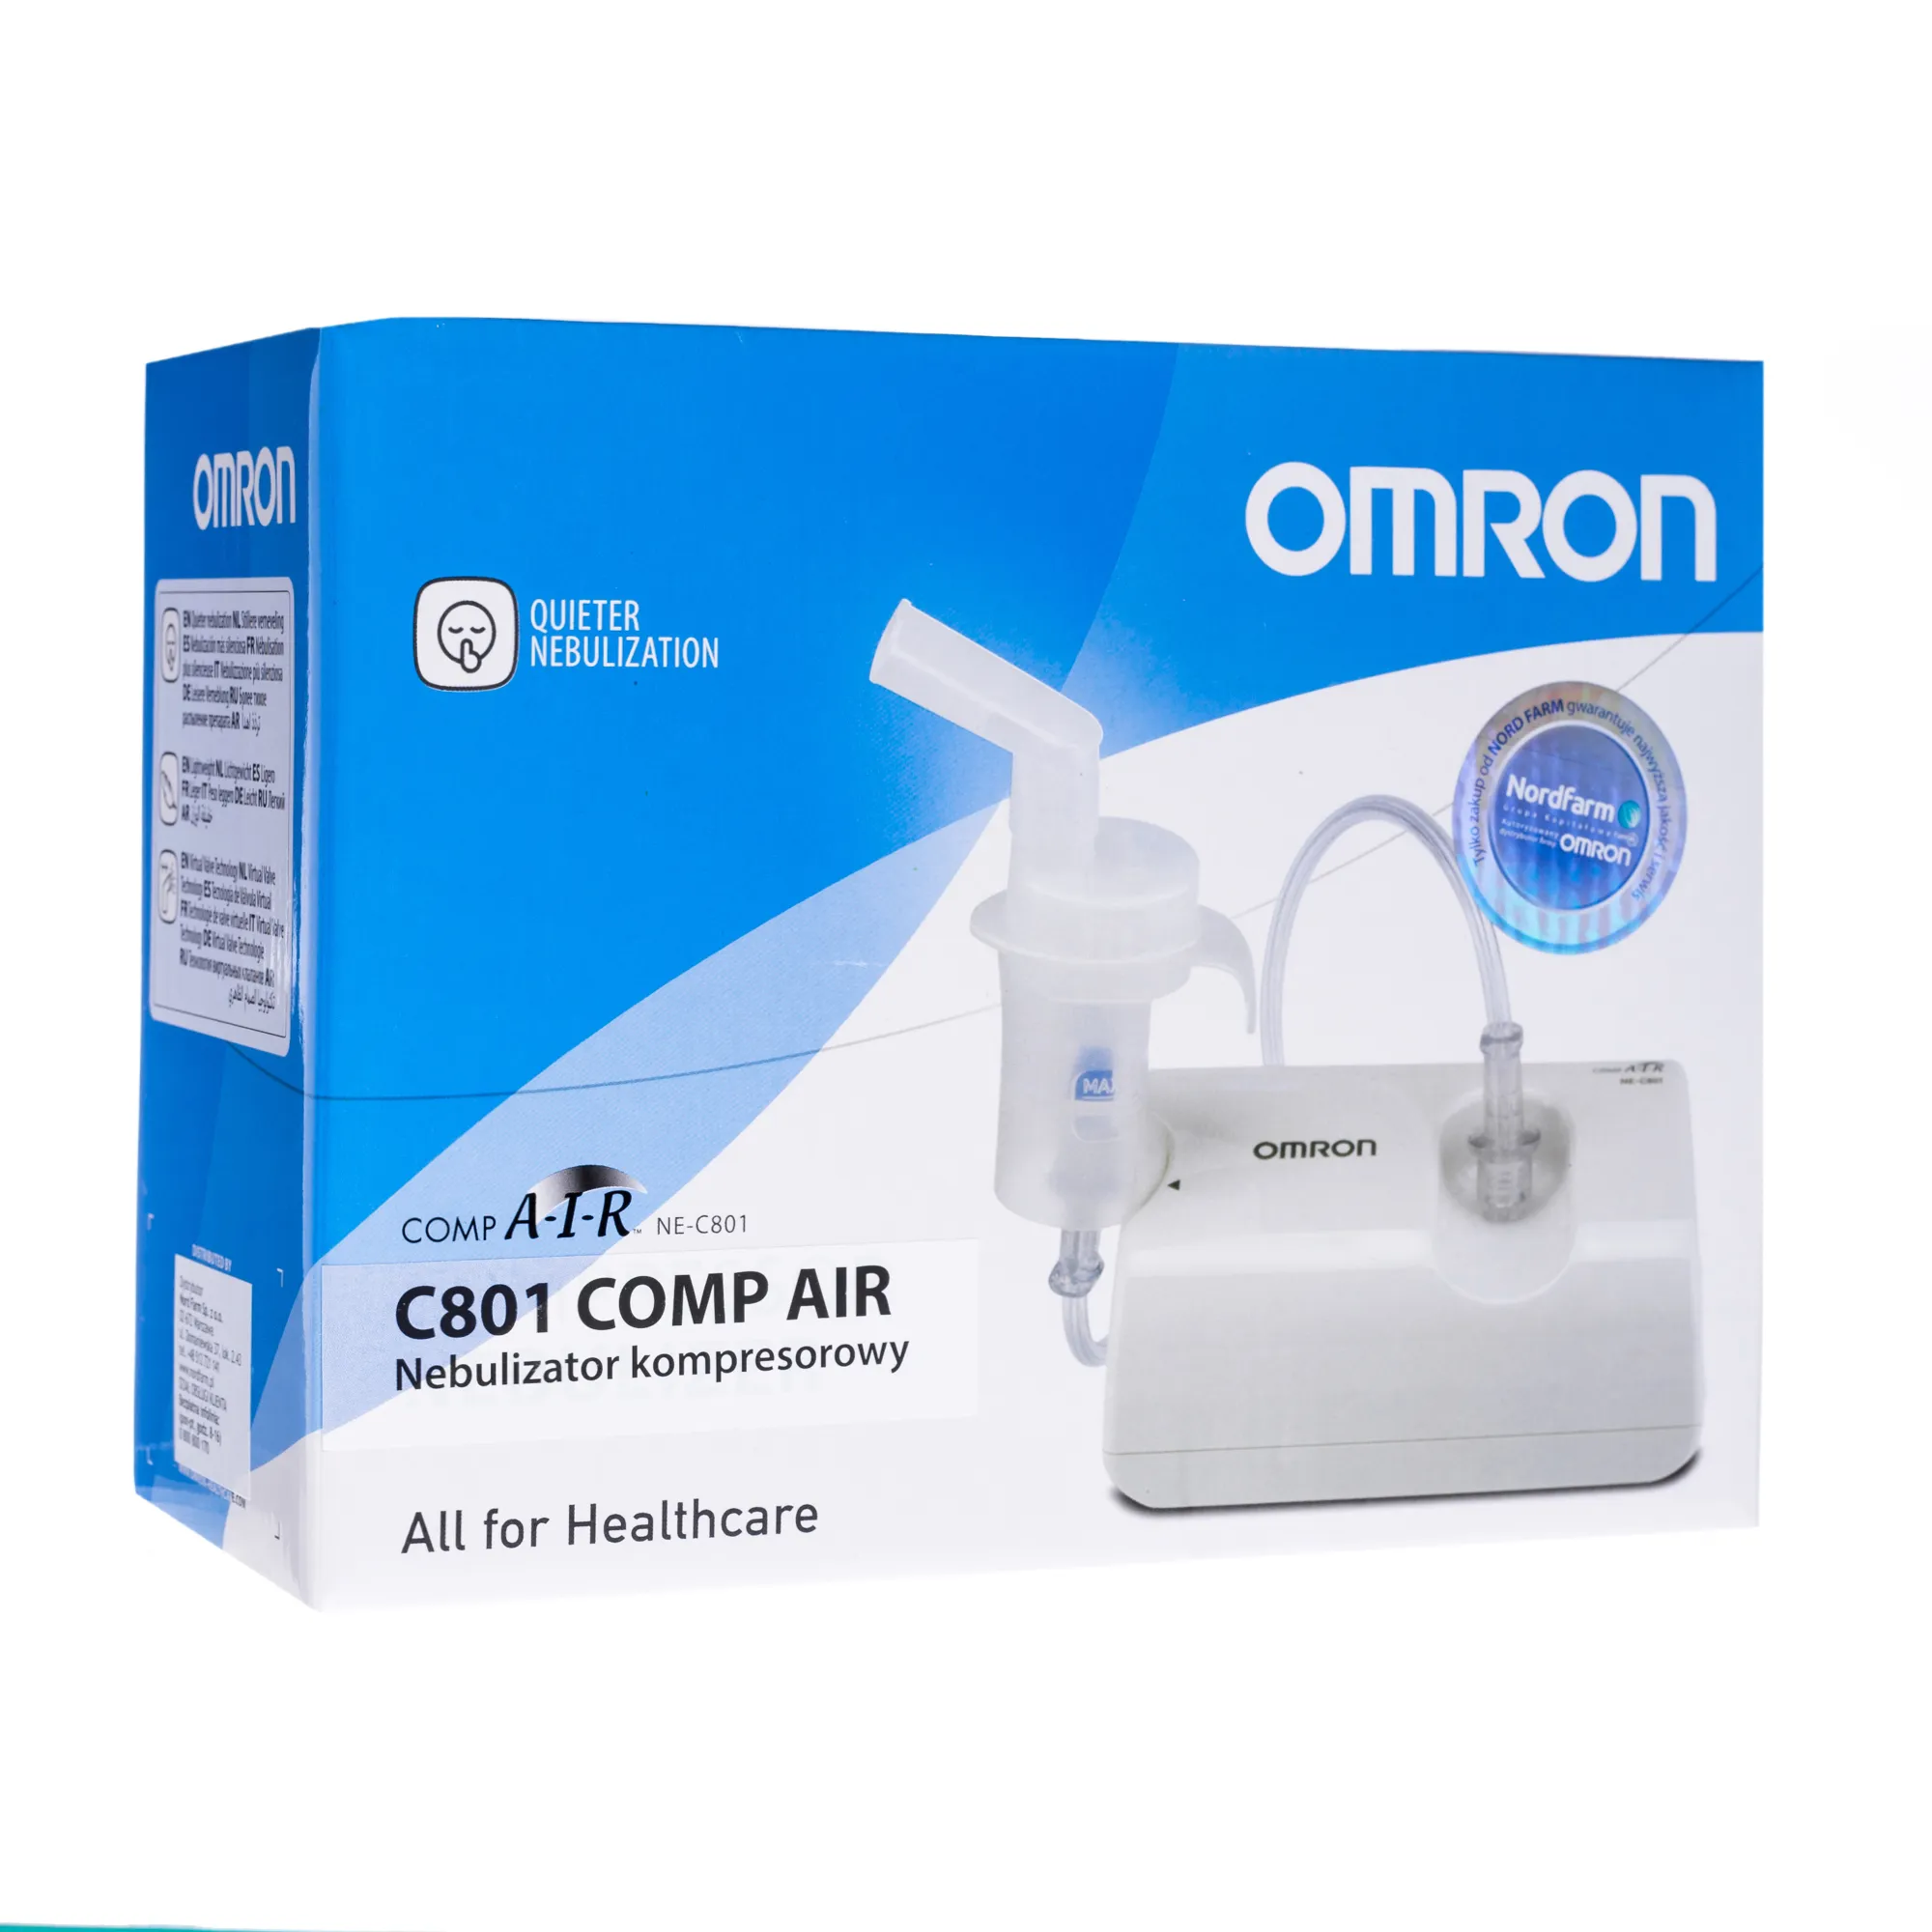 Omron C801 Comp Air, inhalator, 1 sztuka 